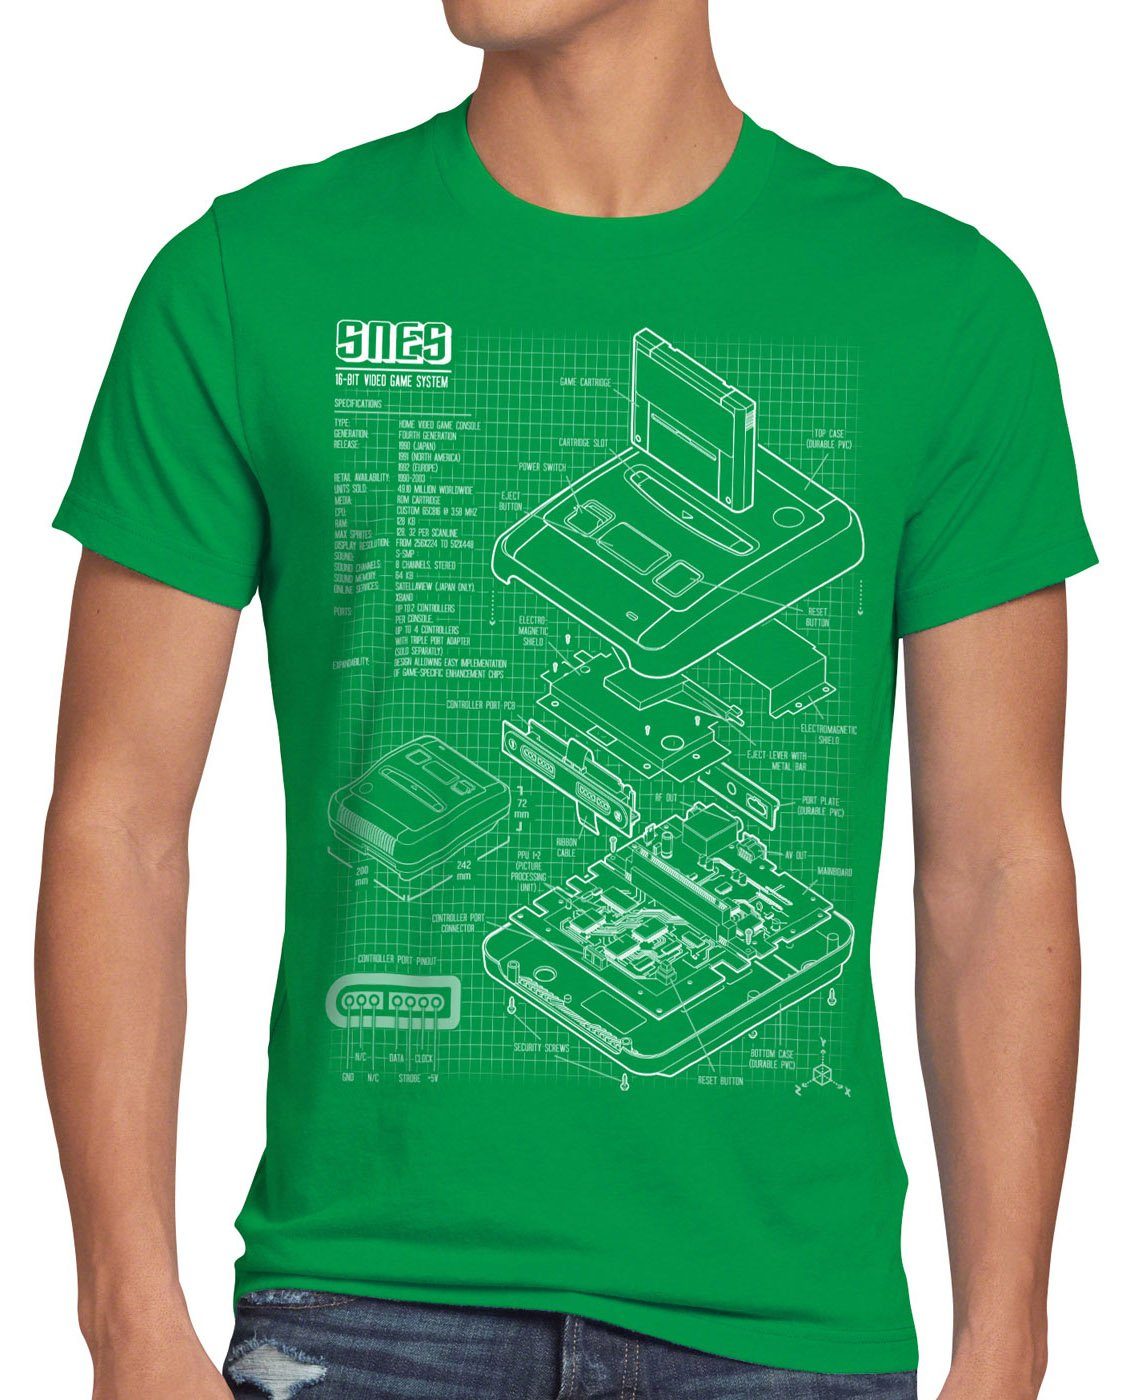 Blaupause 16-Bit style3 grün T-Shirt Videospiel SNES Print-Shirt Herren